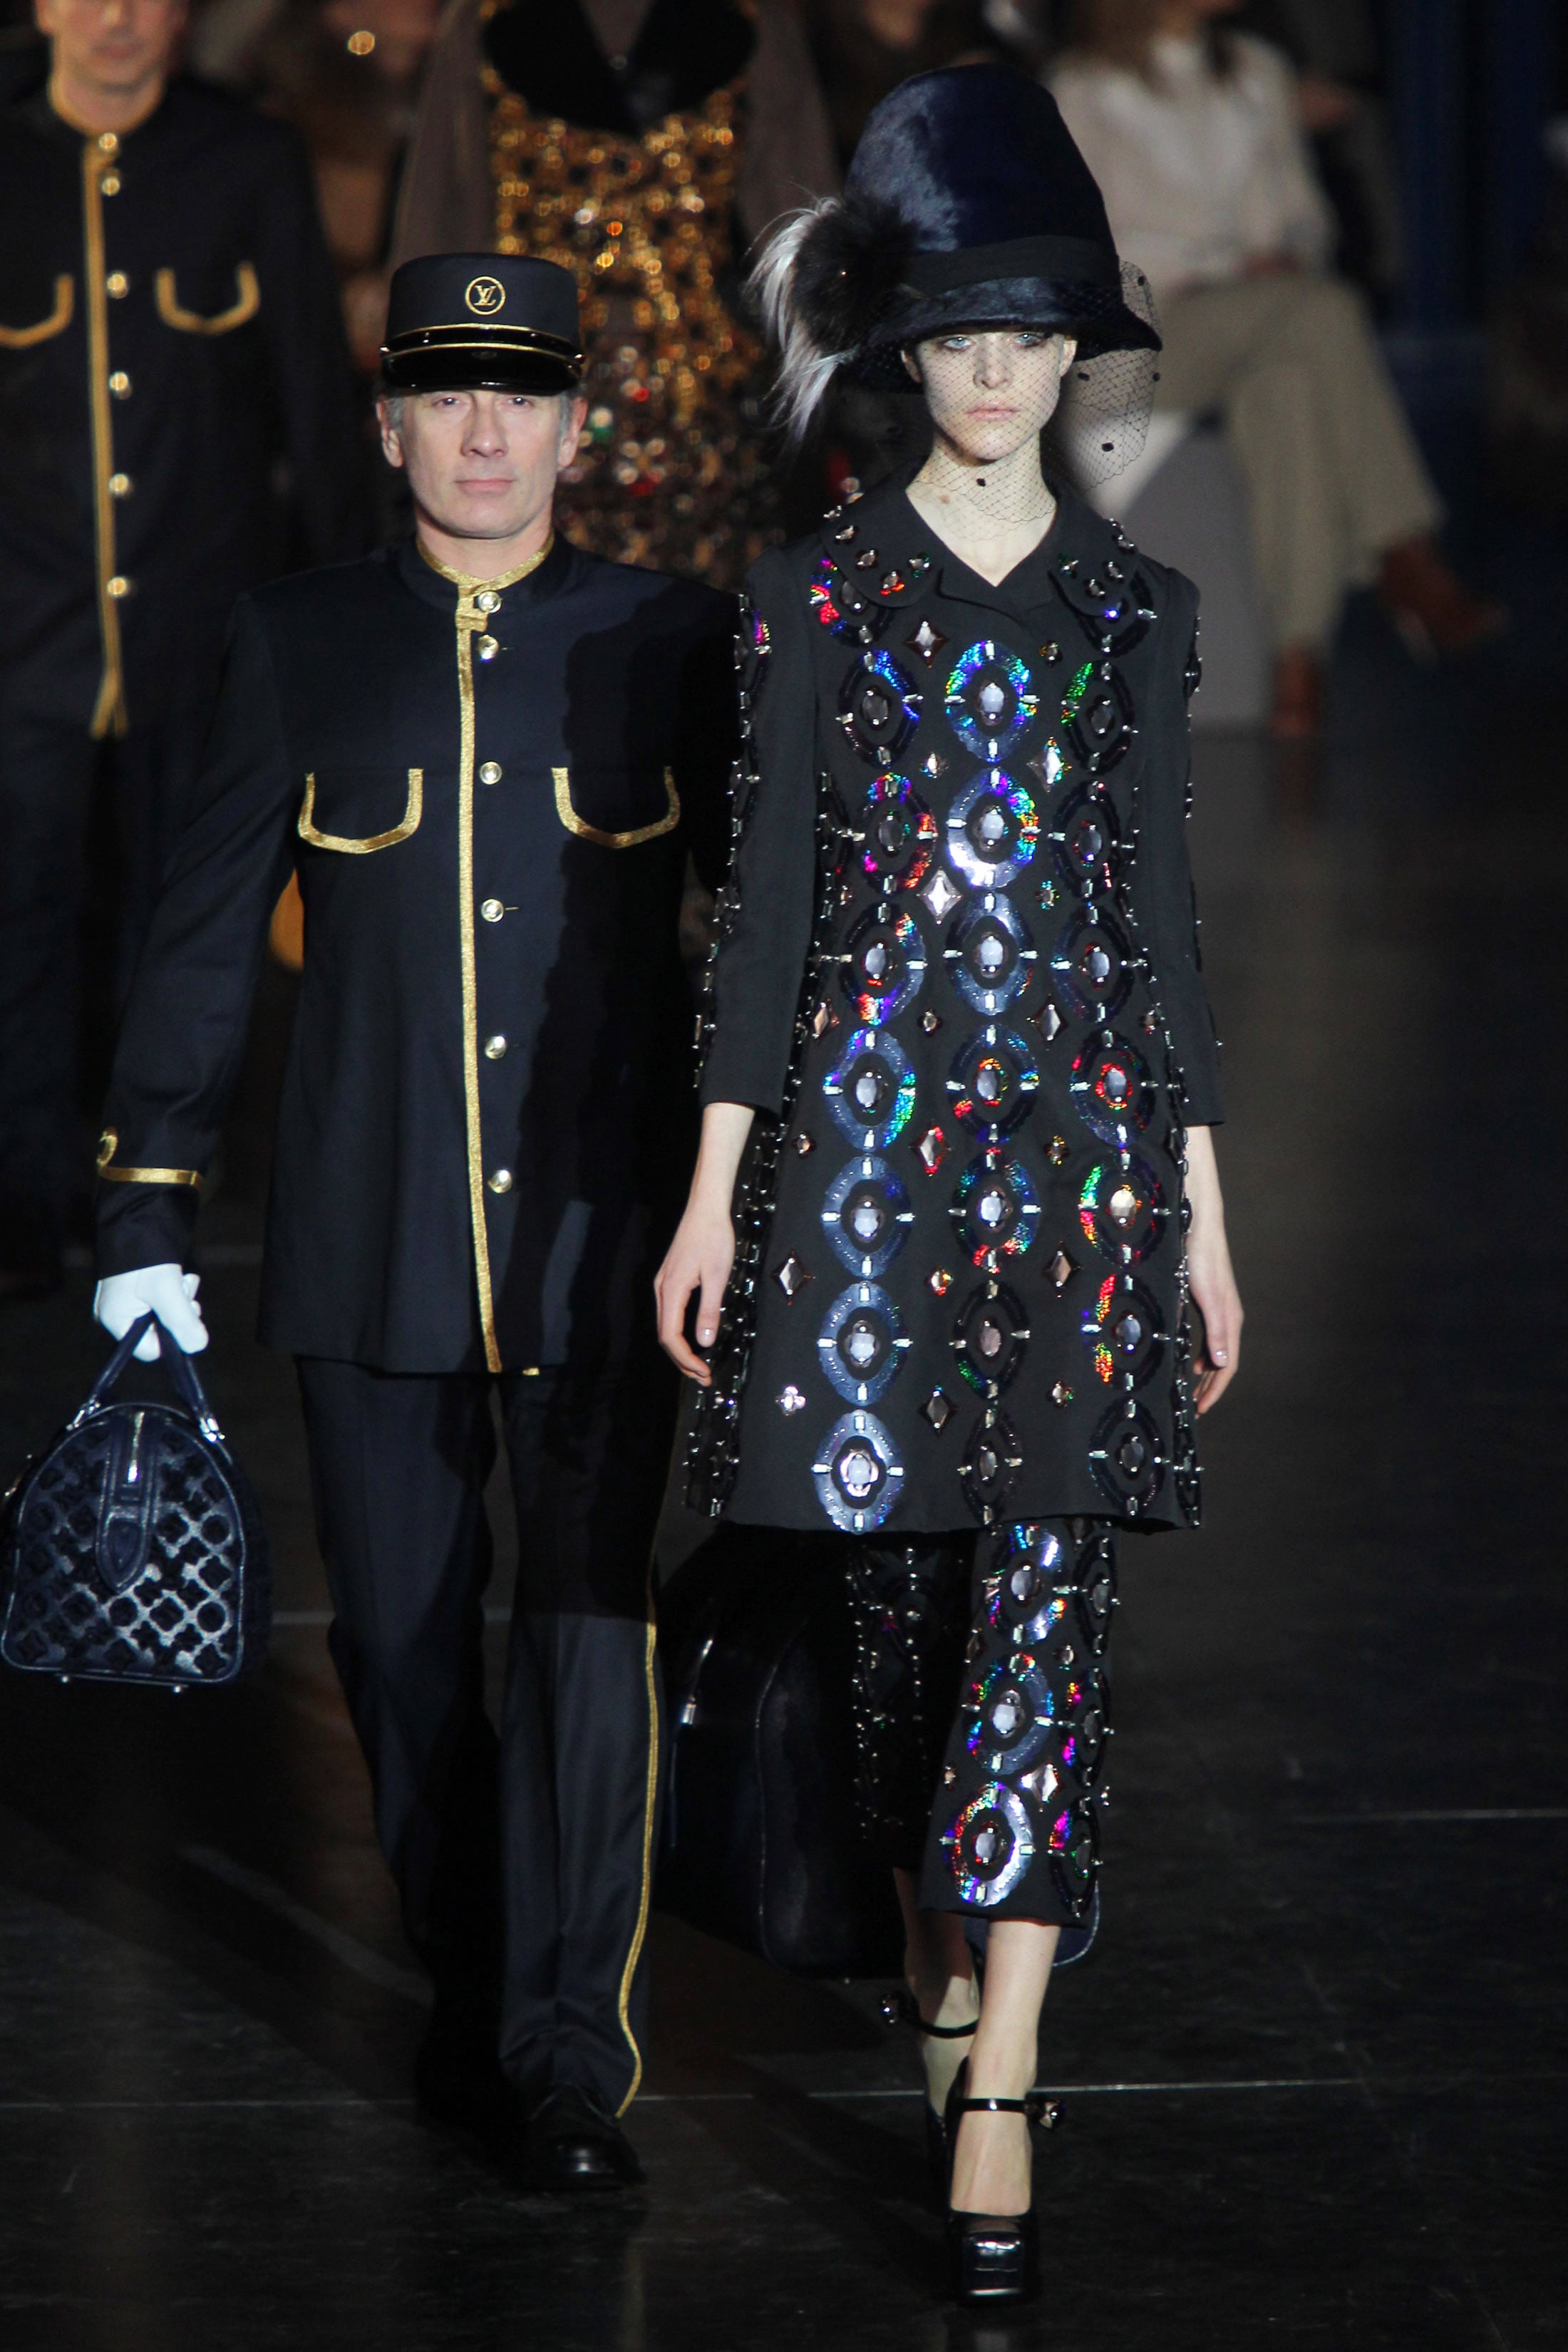 Louis Vuitton stockings, Luxury, Apparel on Carousell